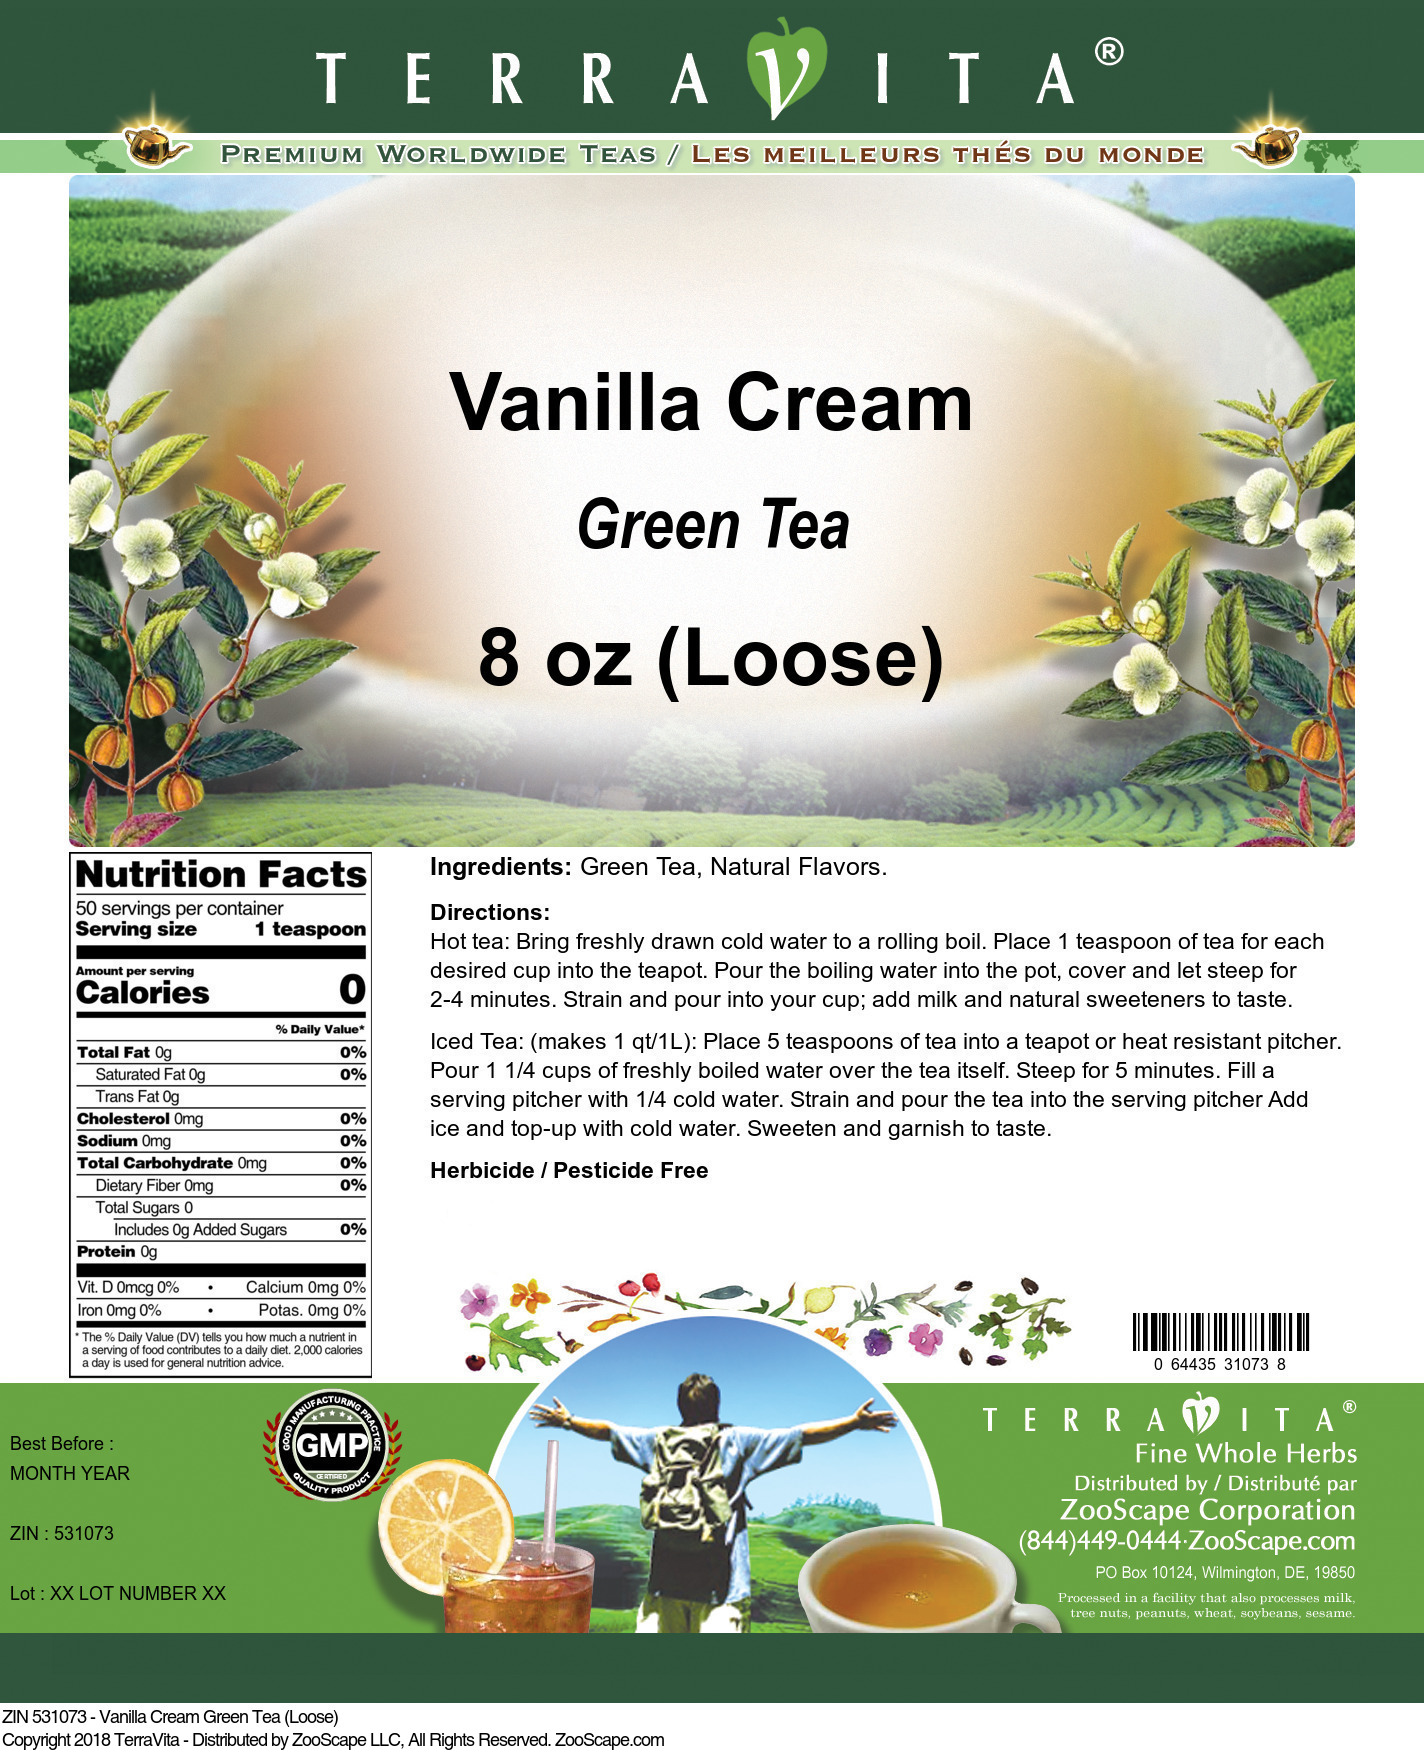 Vanilla Cream Green Tea (Loose) - Label